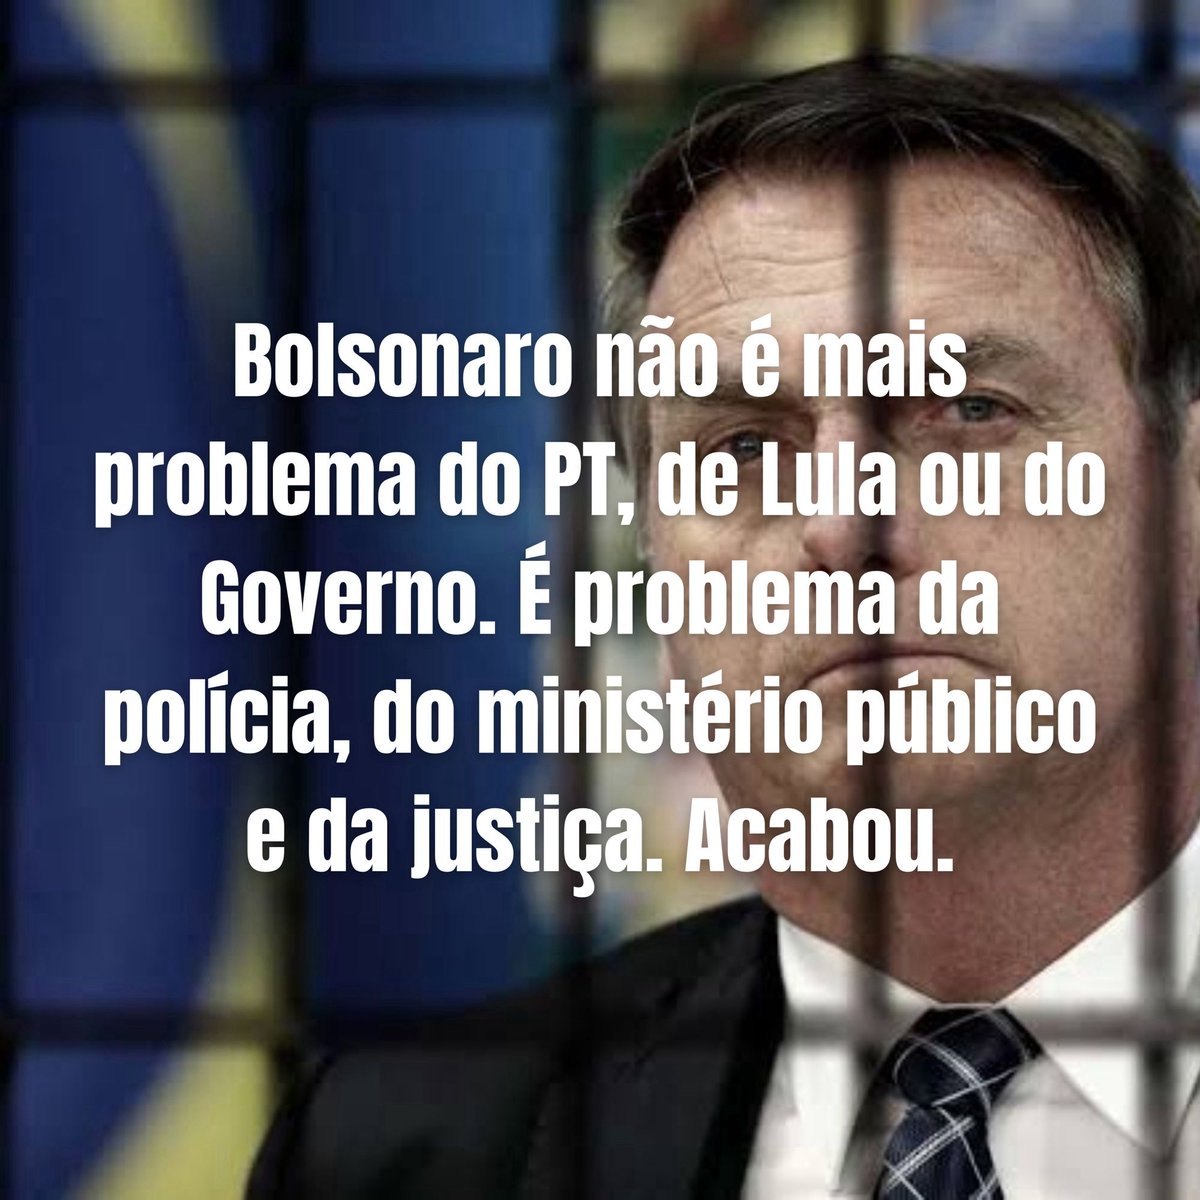 #LulaBrasilEmFoco. Bolsonaro na prisão